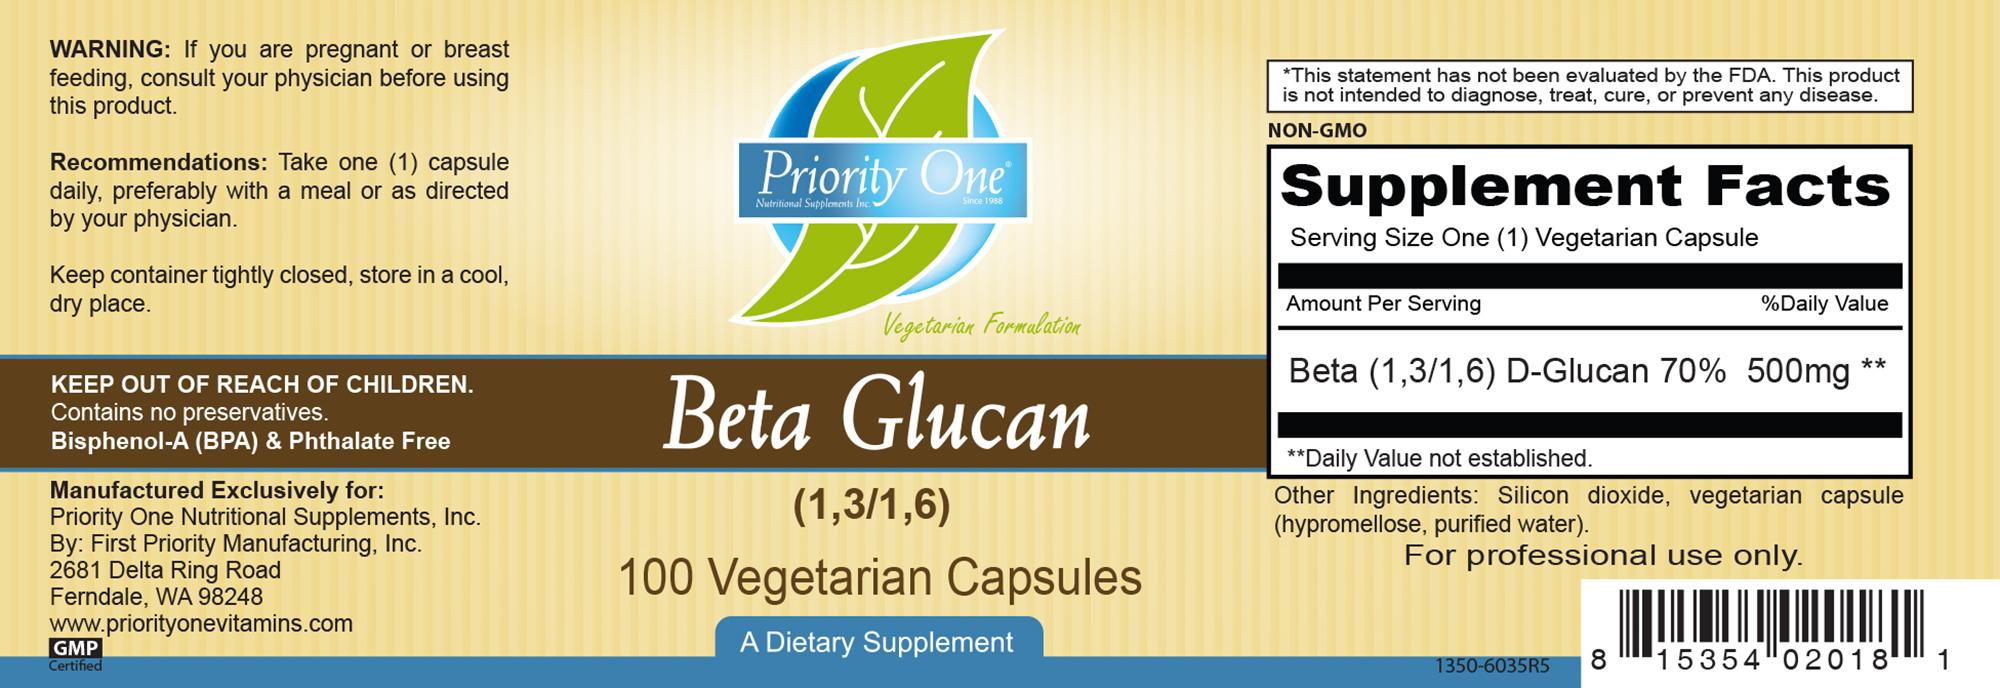 Priority One Vitamins Beta Glucan 500 mg 100 vegcaps